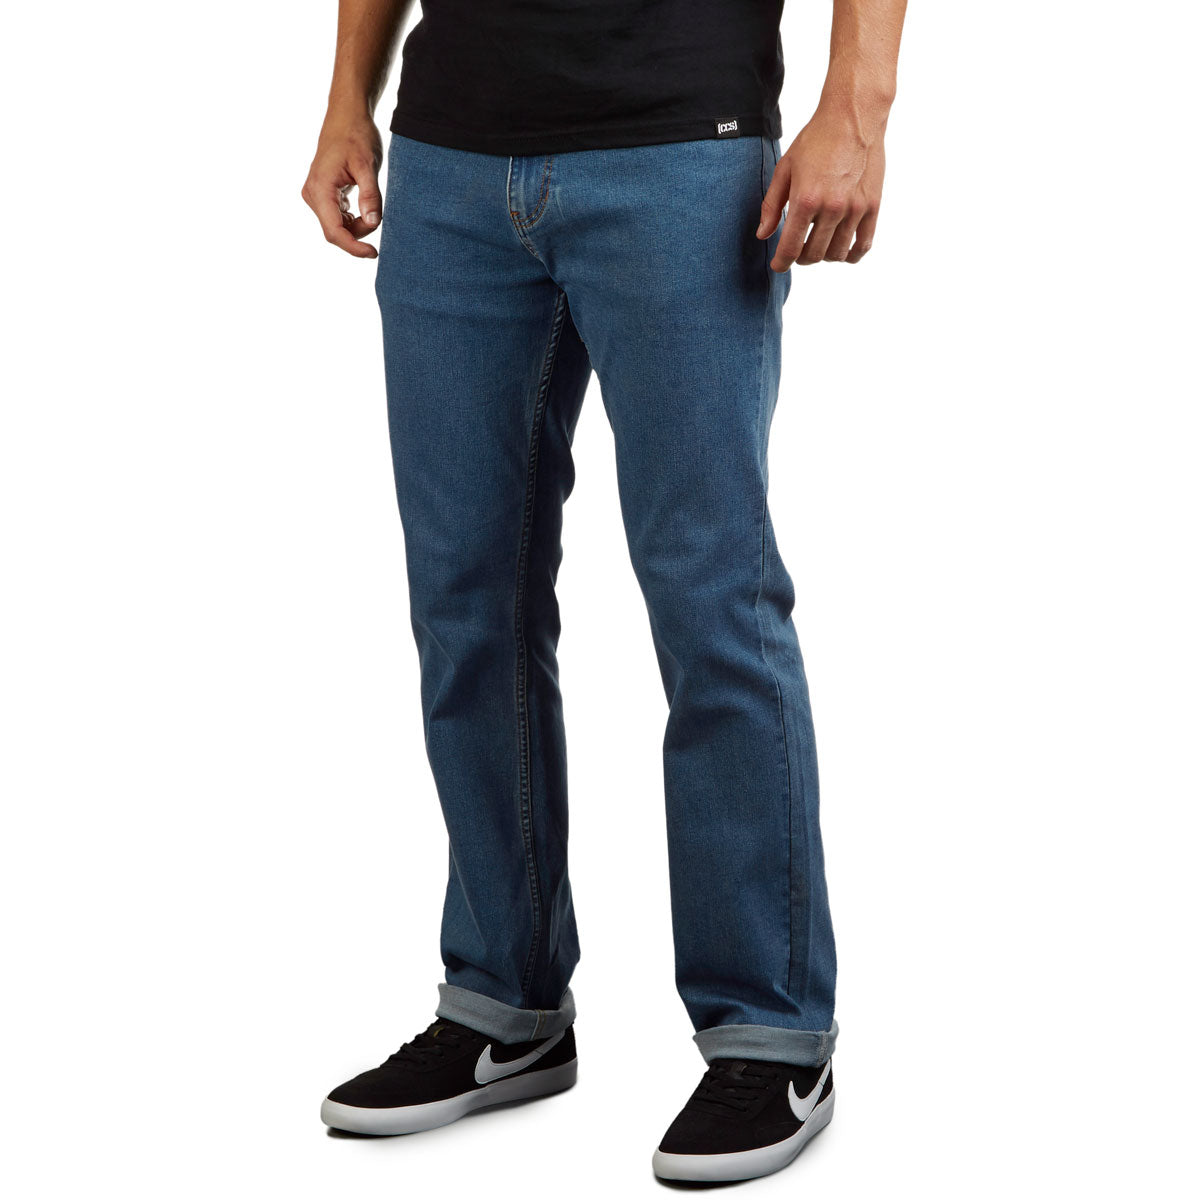 CCS Standard Plus Straight Denim Jeans - New Rinse image 4